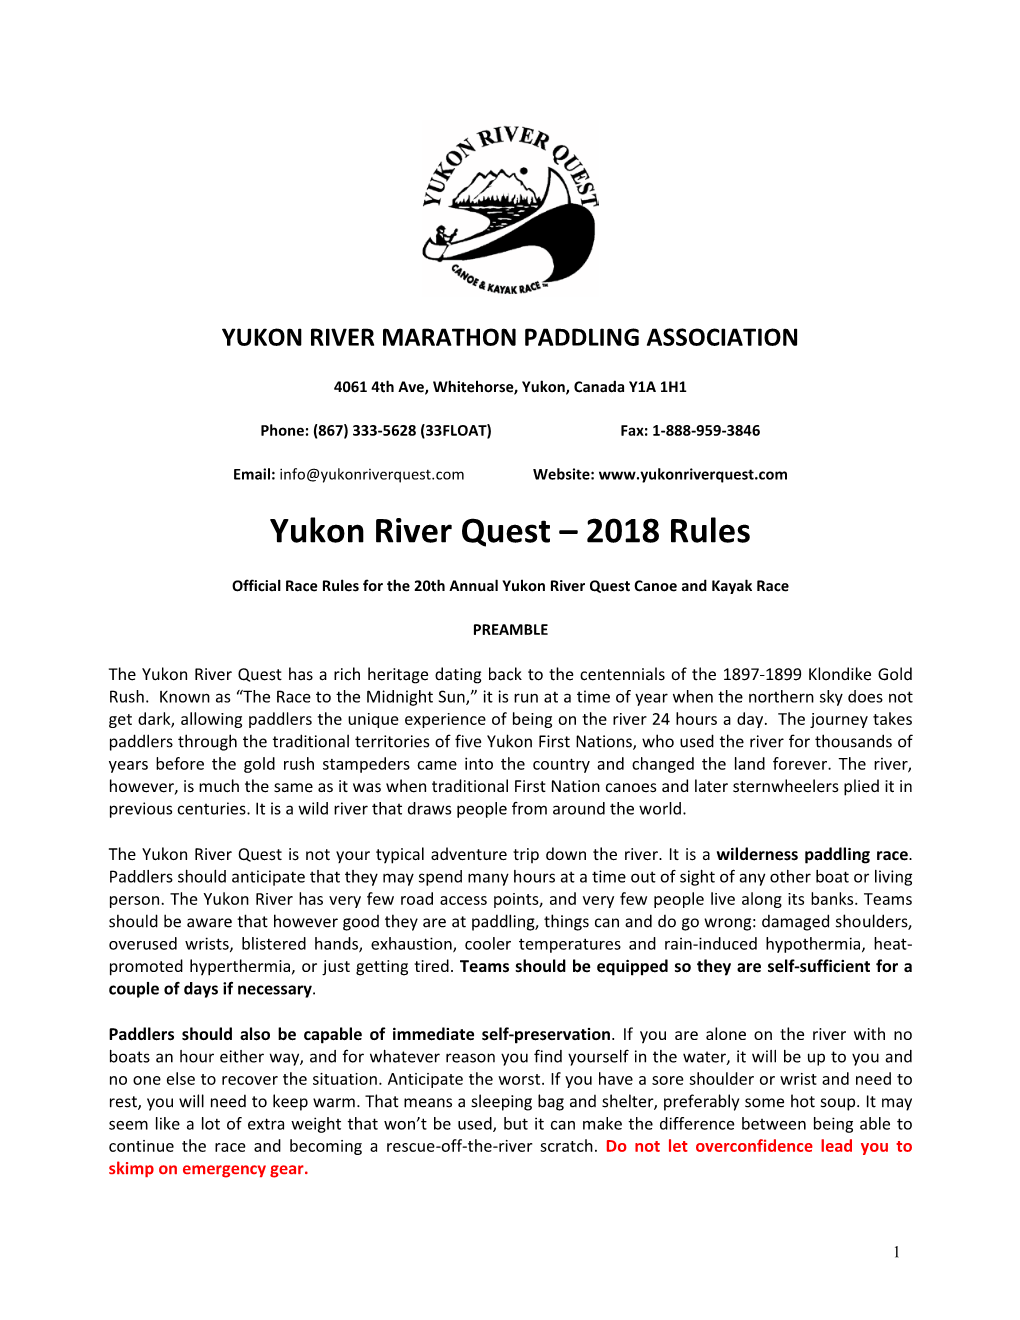 Yukon River Marathon Paddling Association